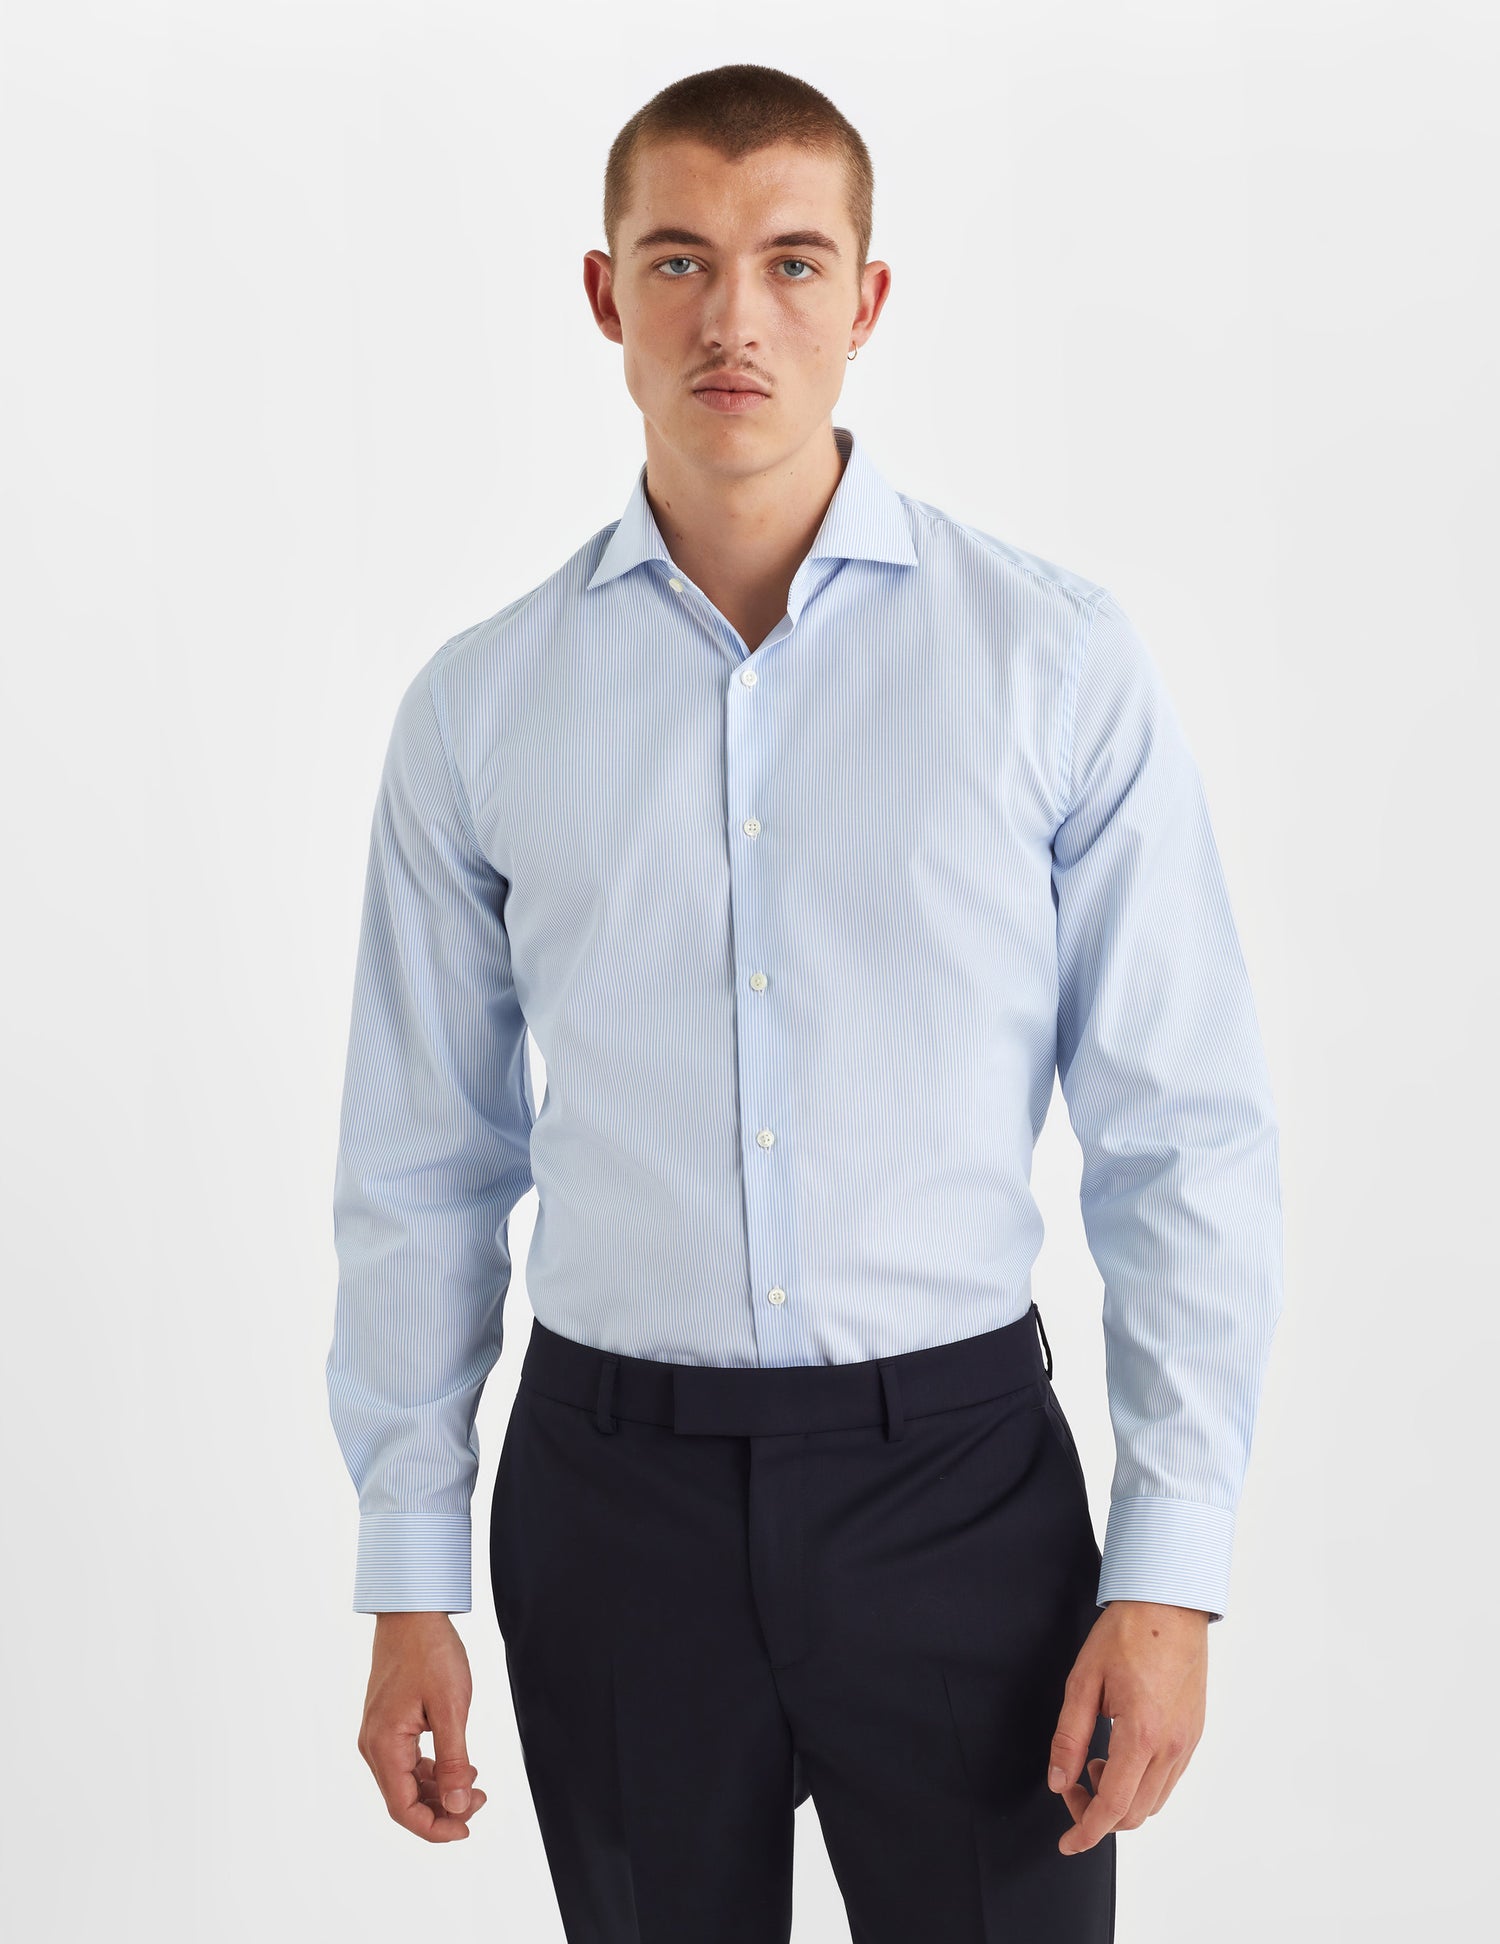 Fitted blue striped shirt - Poplin - Italian Collar#3